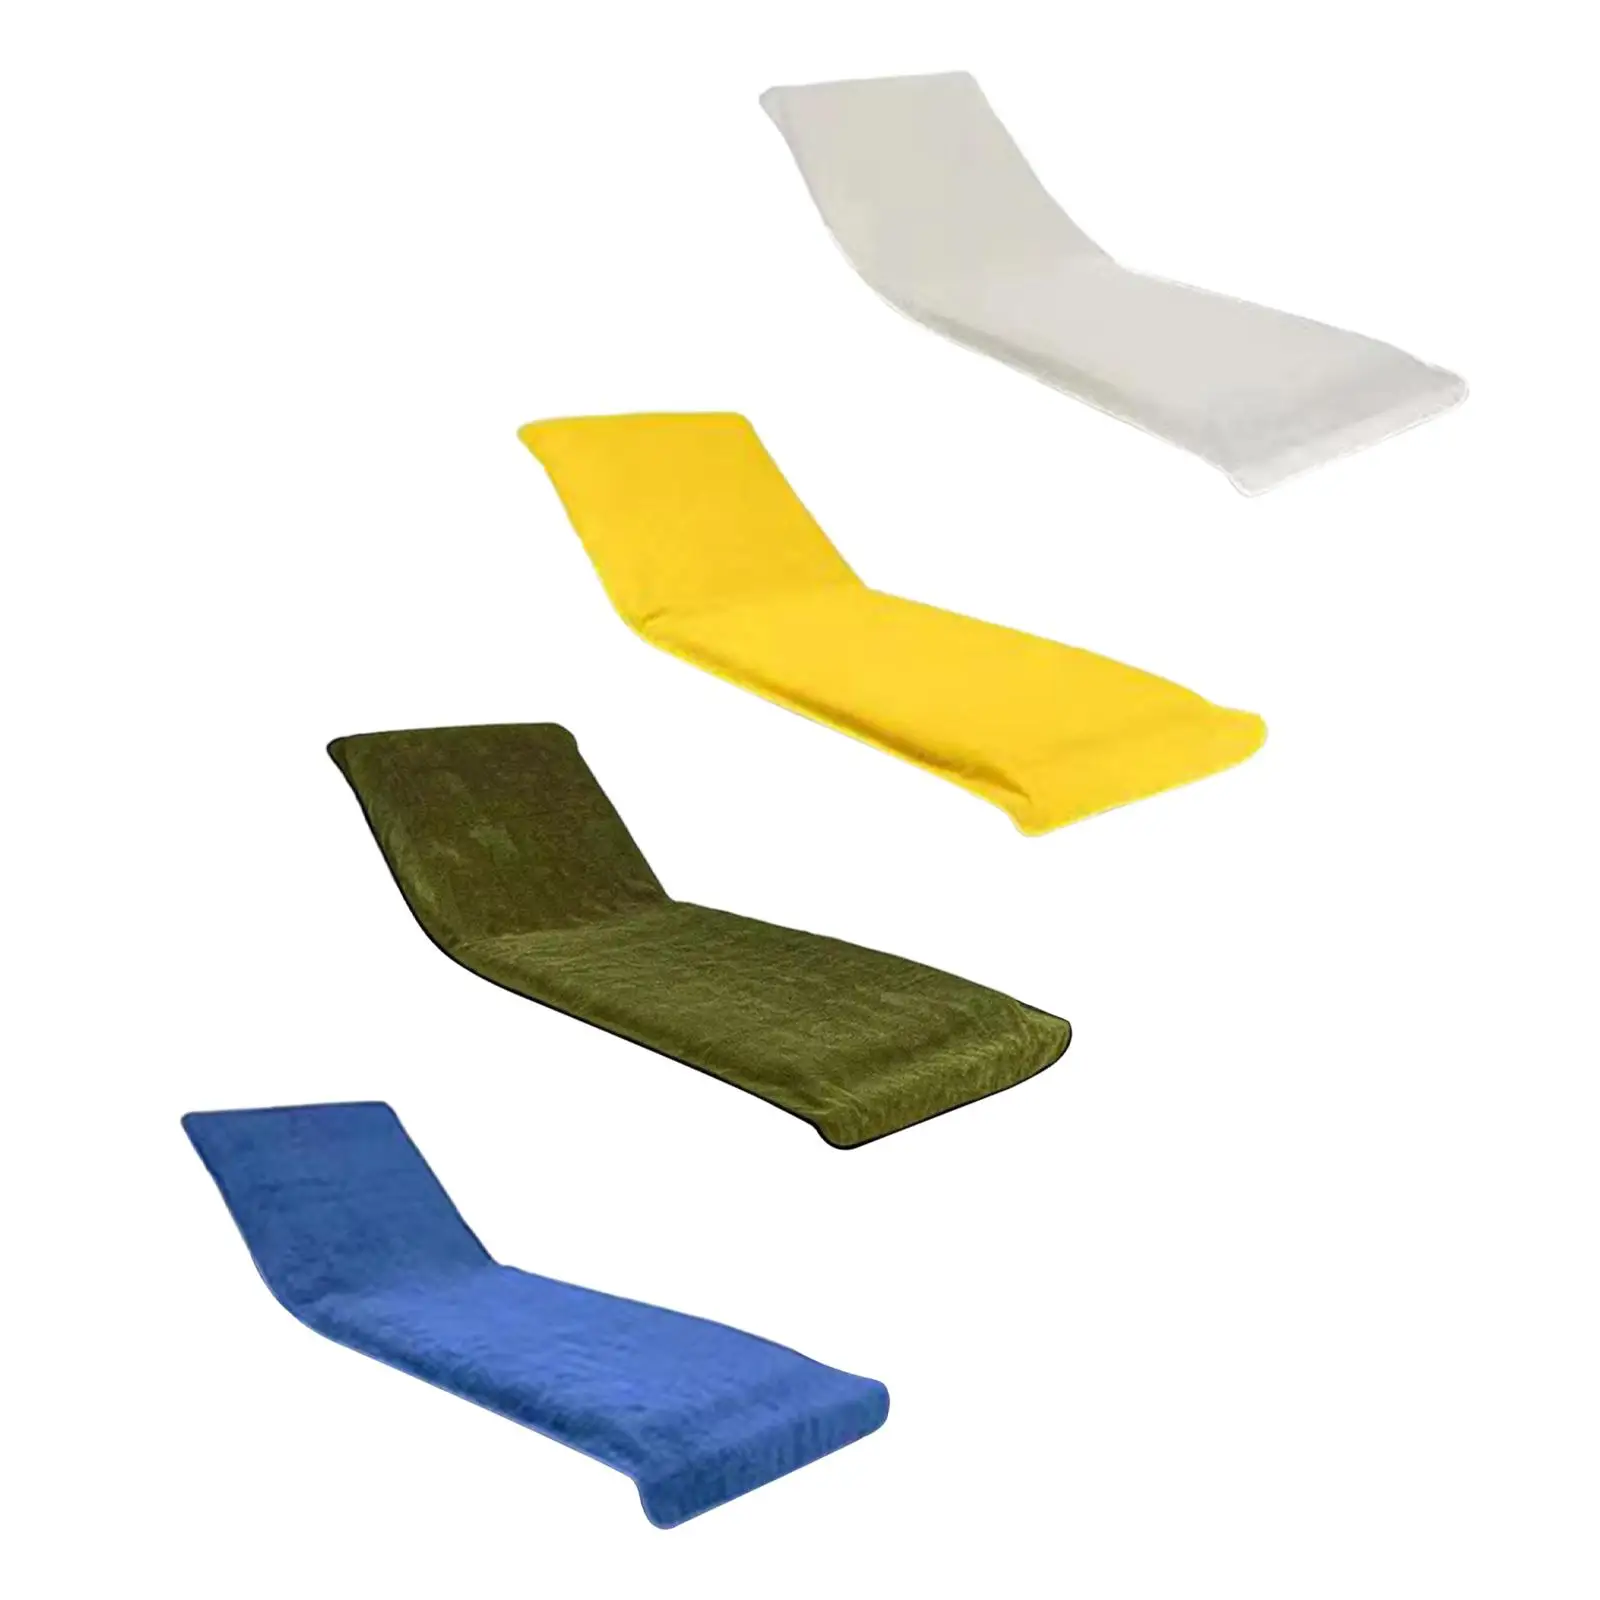 Pool Beach Lounge Chair Towel Cover 75x200cm Microfiber Anti Slip for Sunbathing Hotel Outdoor Lightweight Portable Comfortable